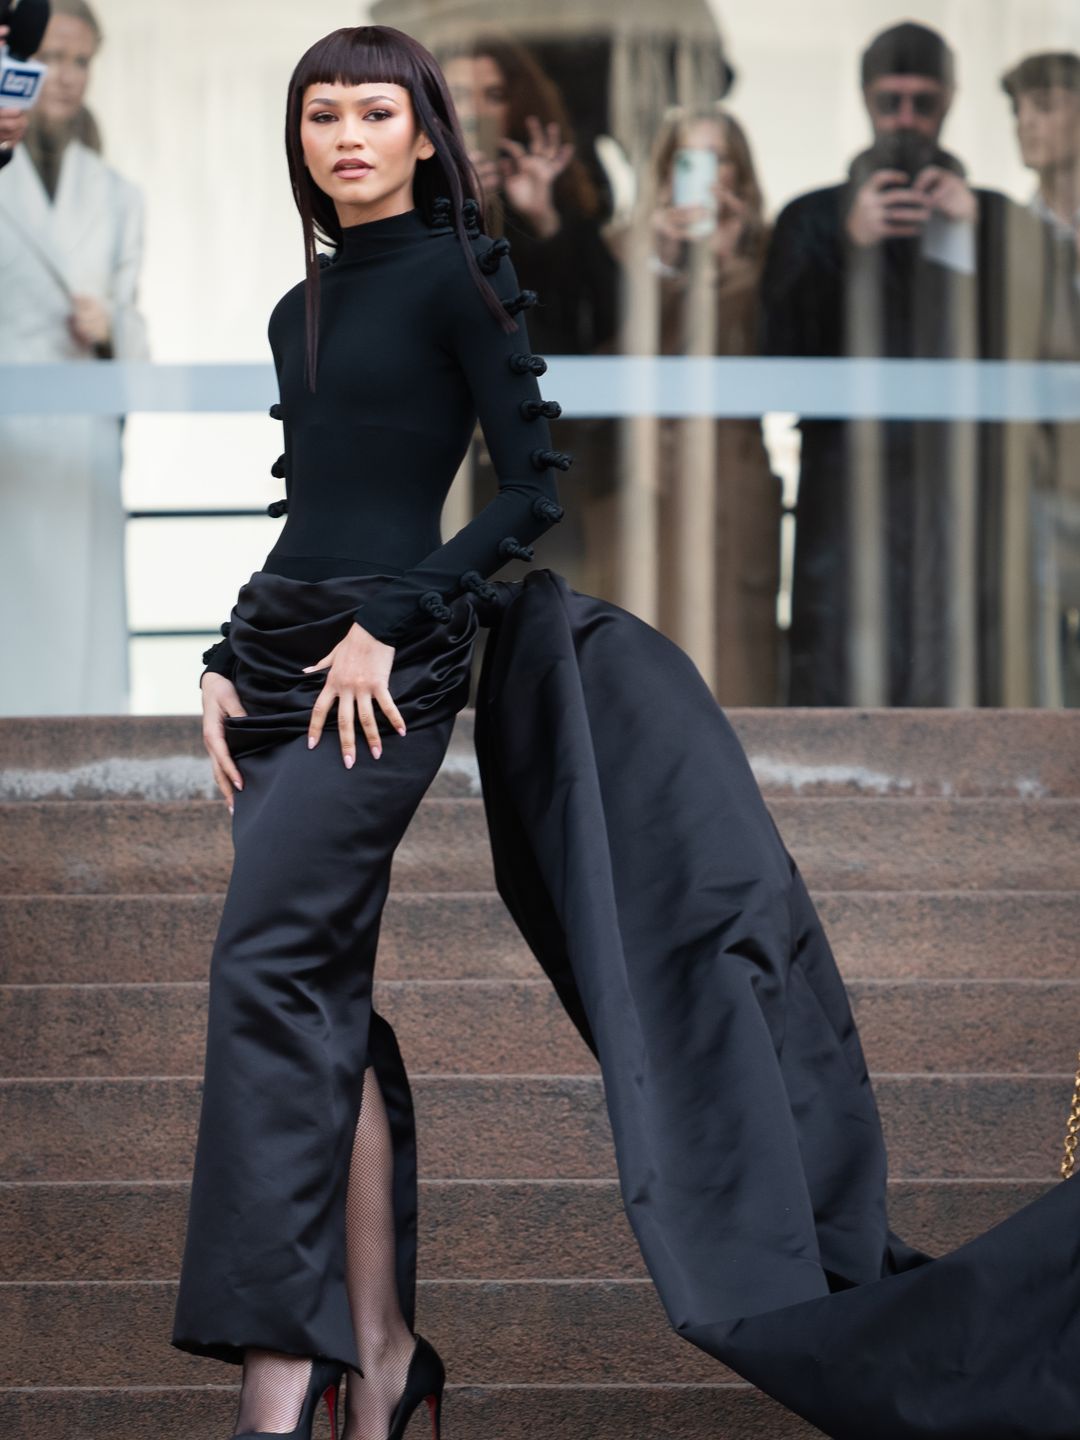 Zendaya just wore £16 calf-high fishnets to Paris Fashion Week | HELLO!